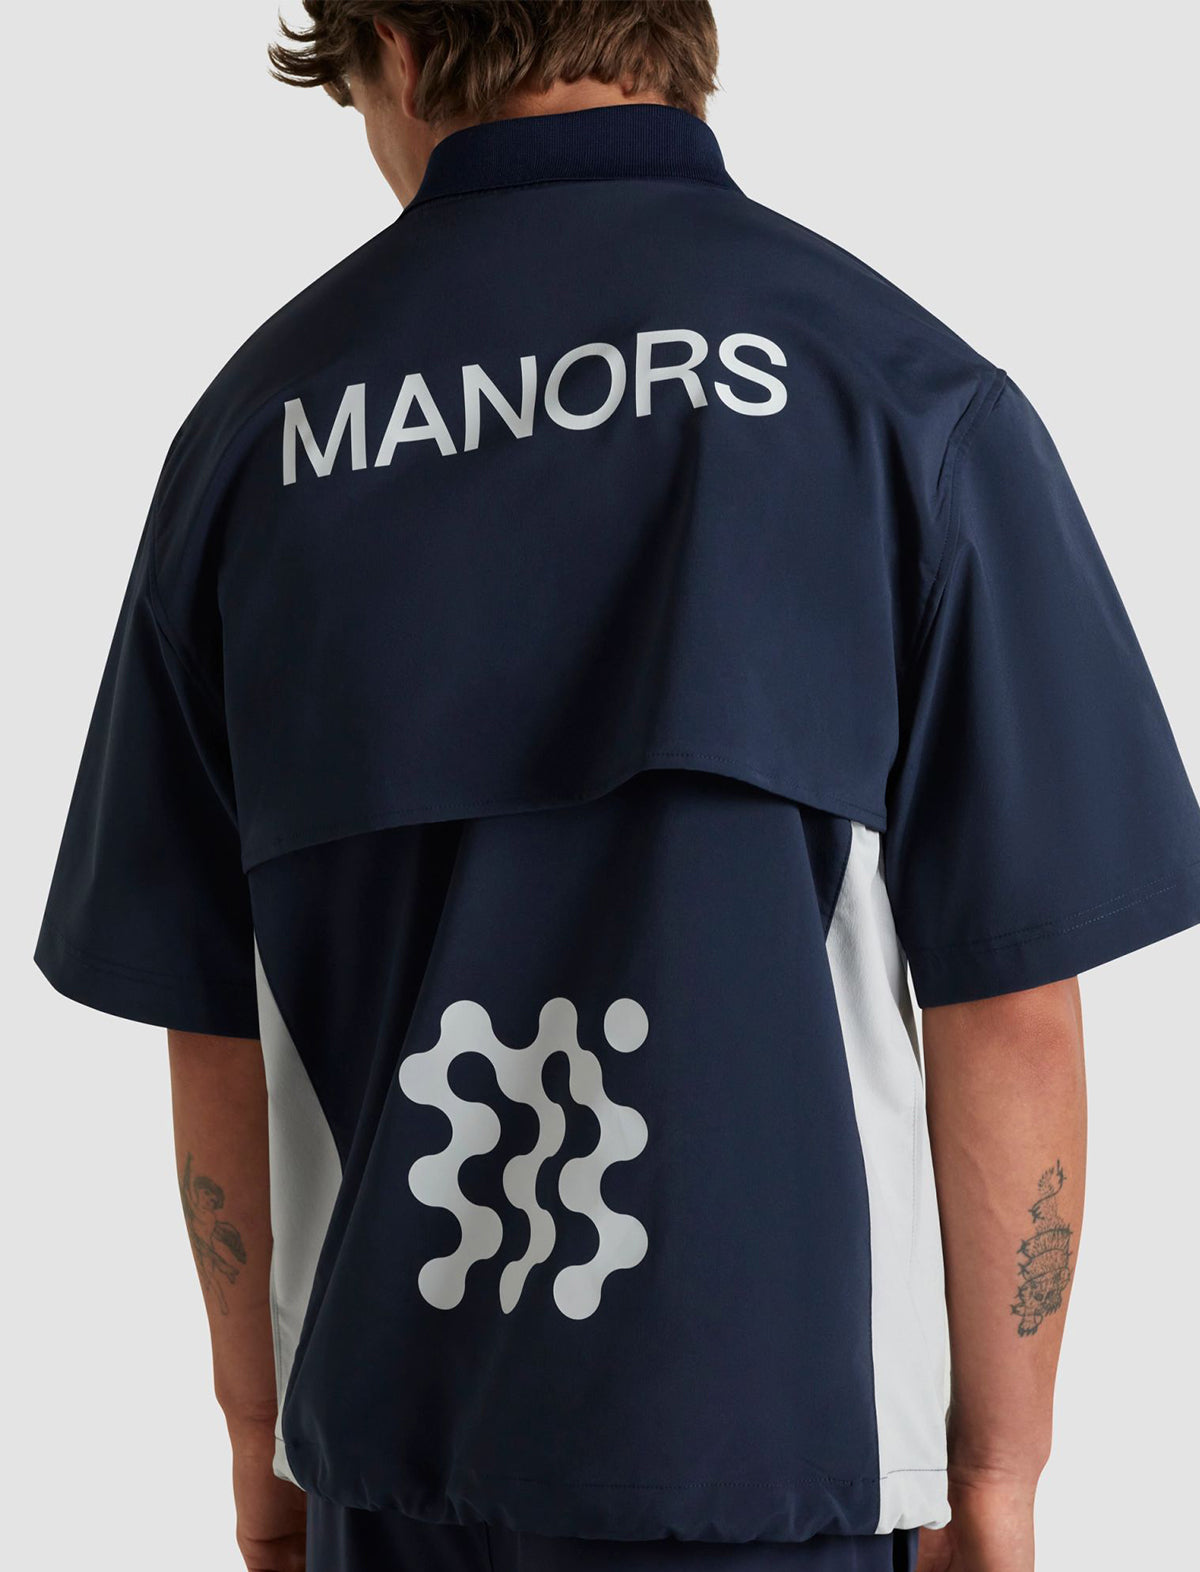 MANORS GOLF Shooter Shirt in Navy